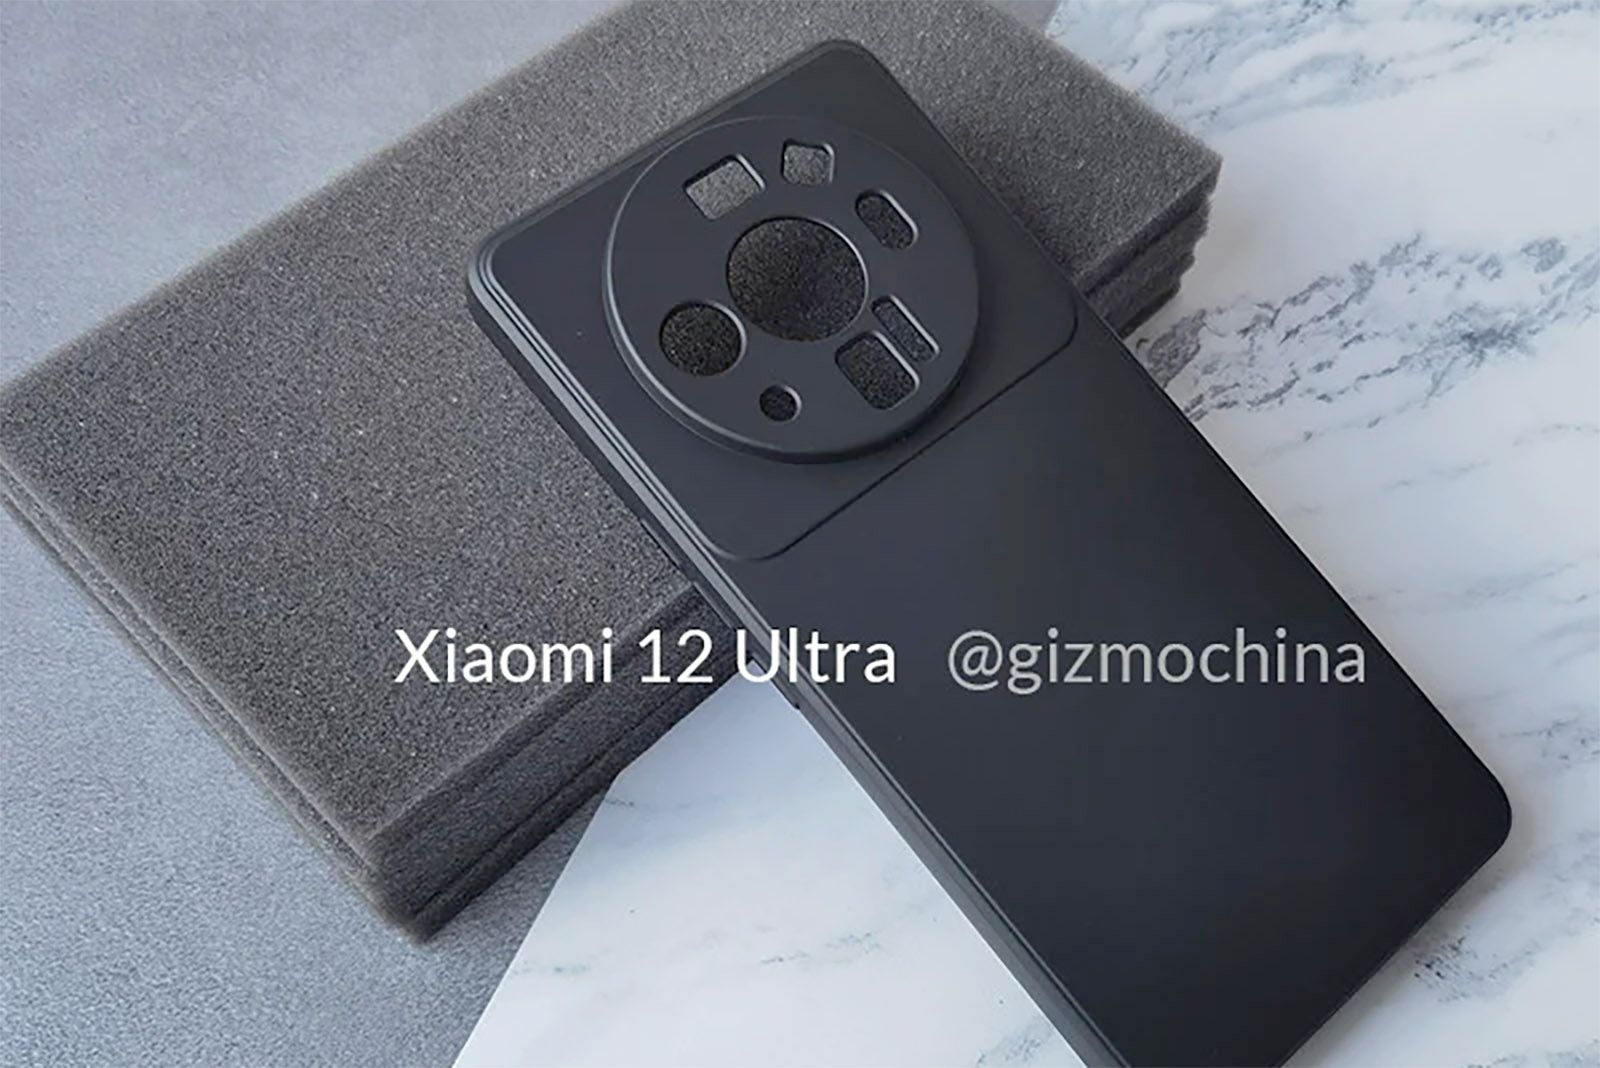 Xiaomi 12 Ultra traerá pantalla trasera mejorada